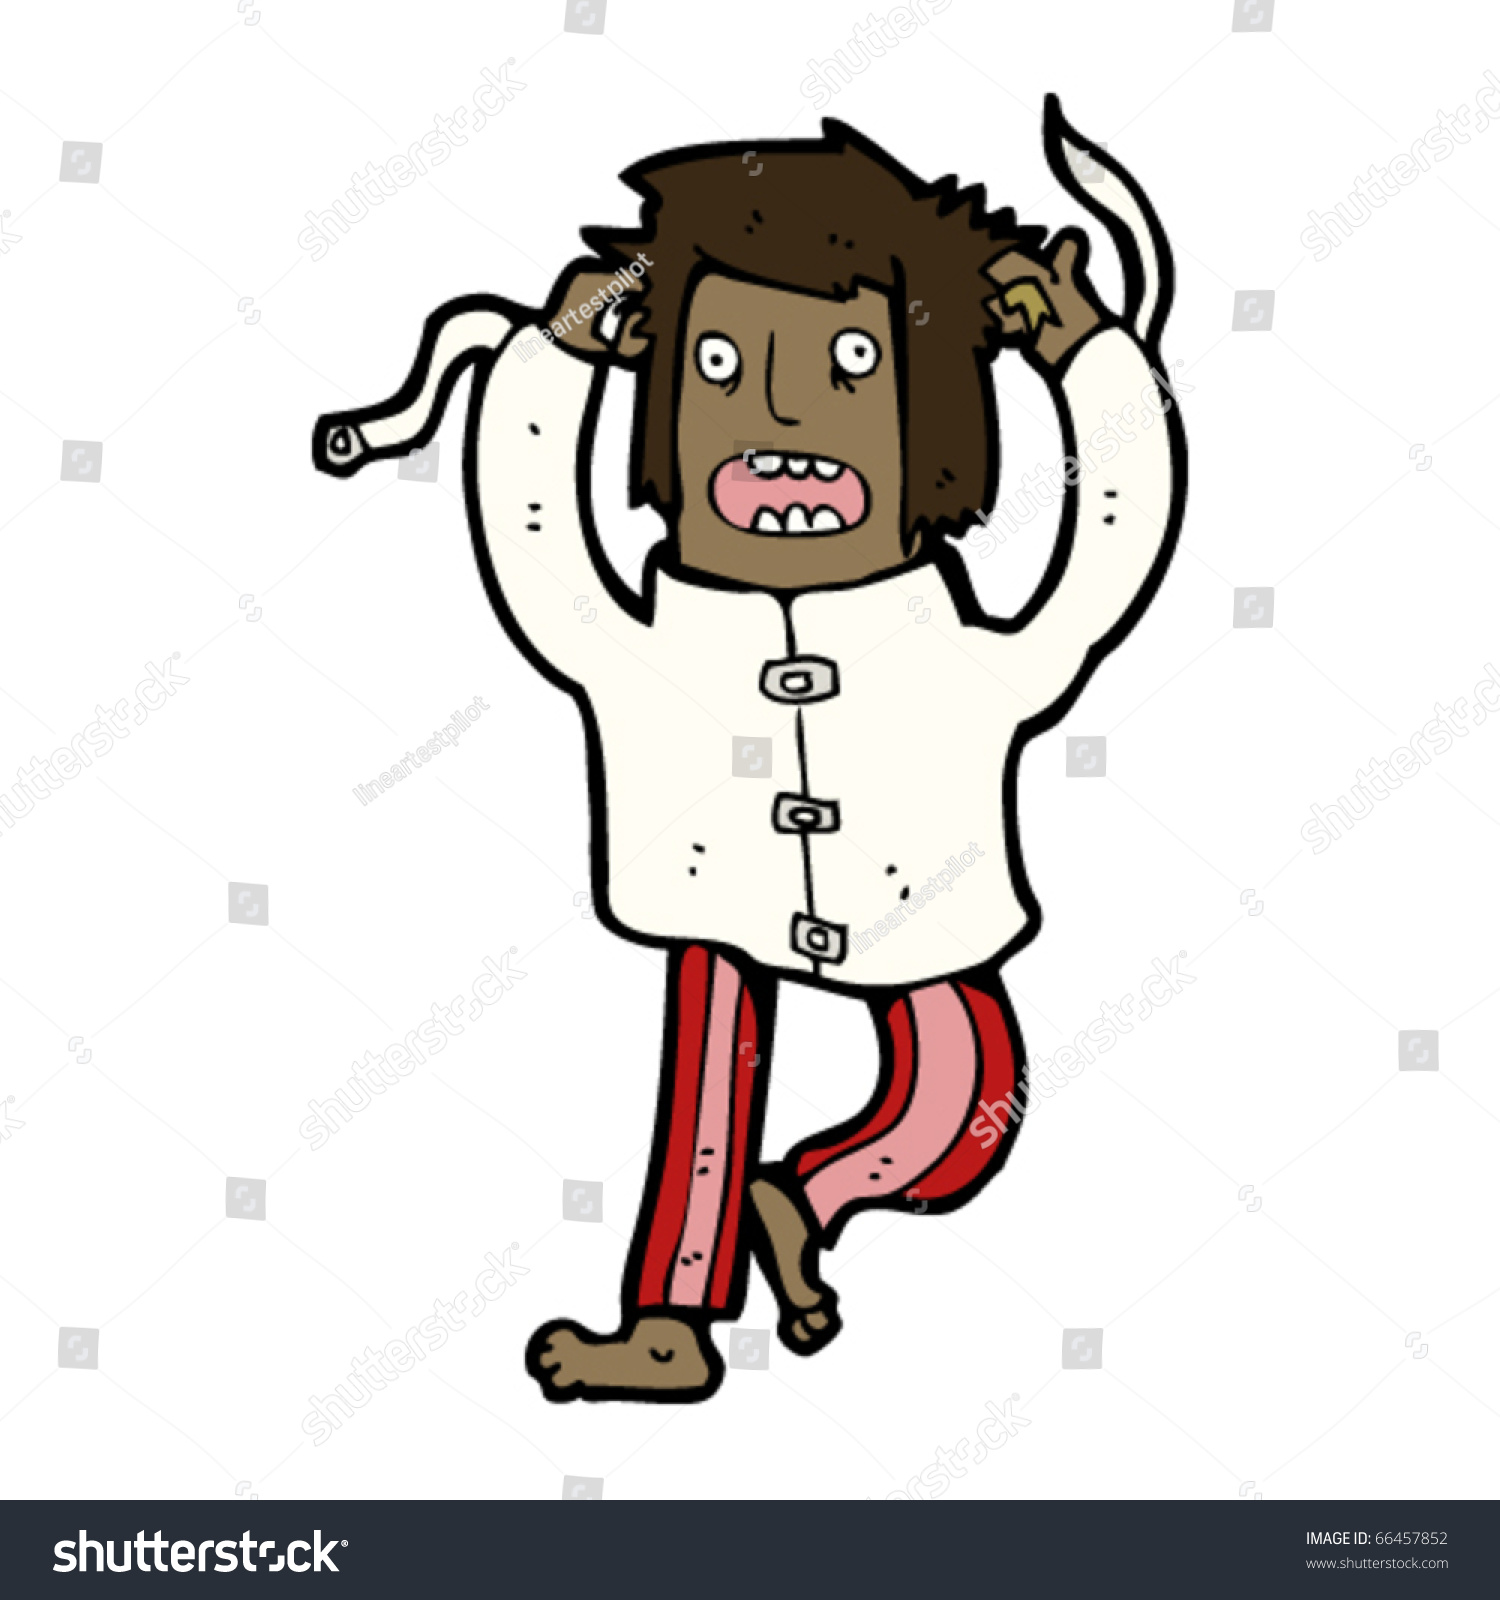 Crazy Person Cartoon Stock Vector 66457852 - Shutterstock